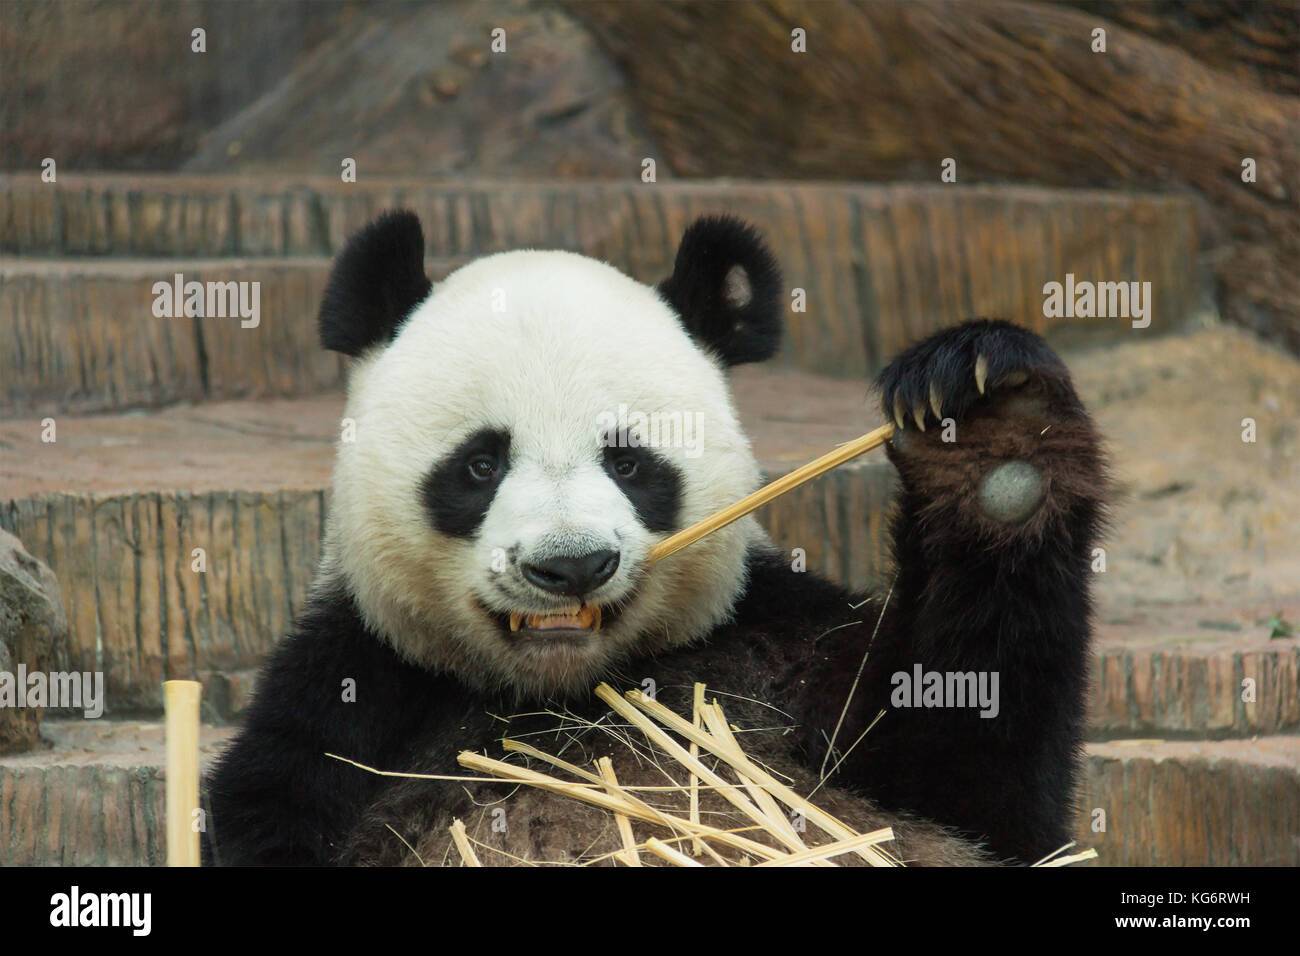 giant panda bear eating bamboo Stock Photo